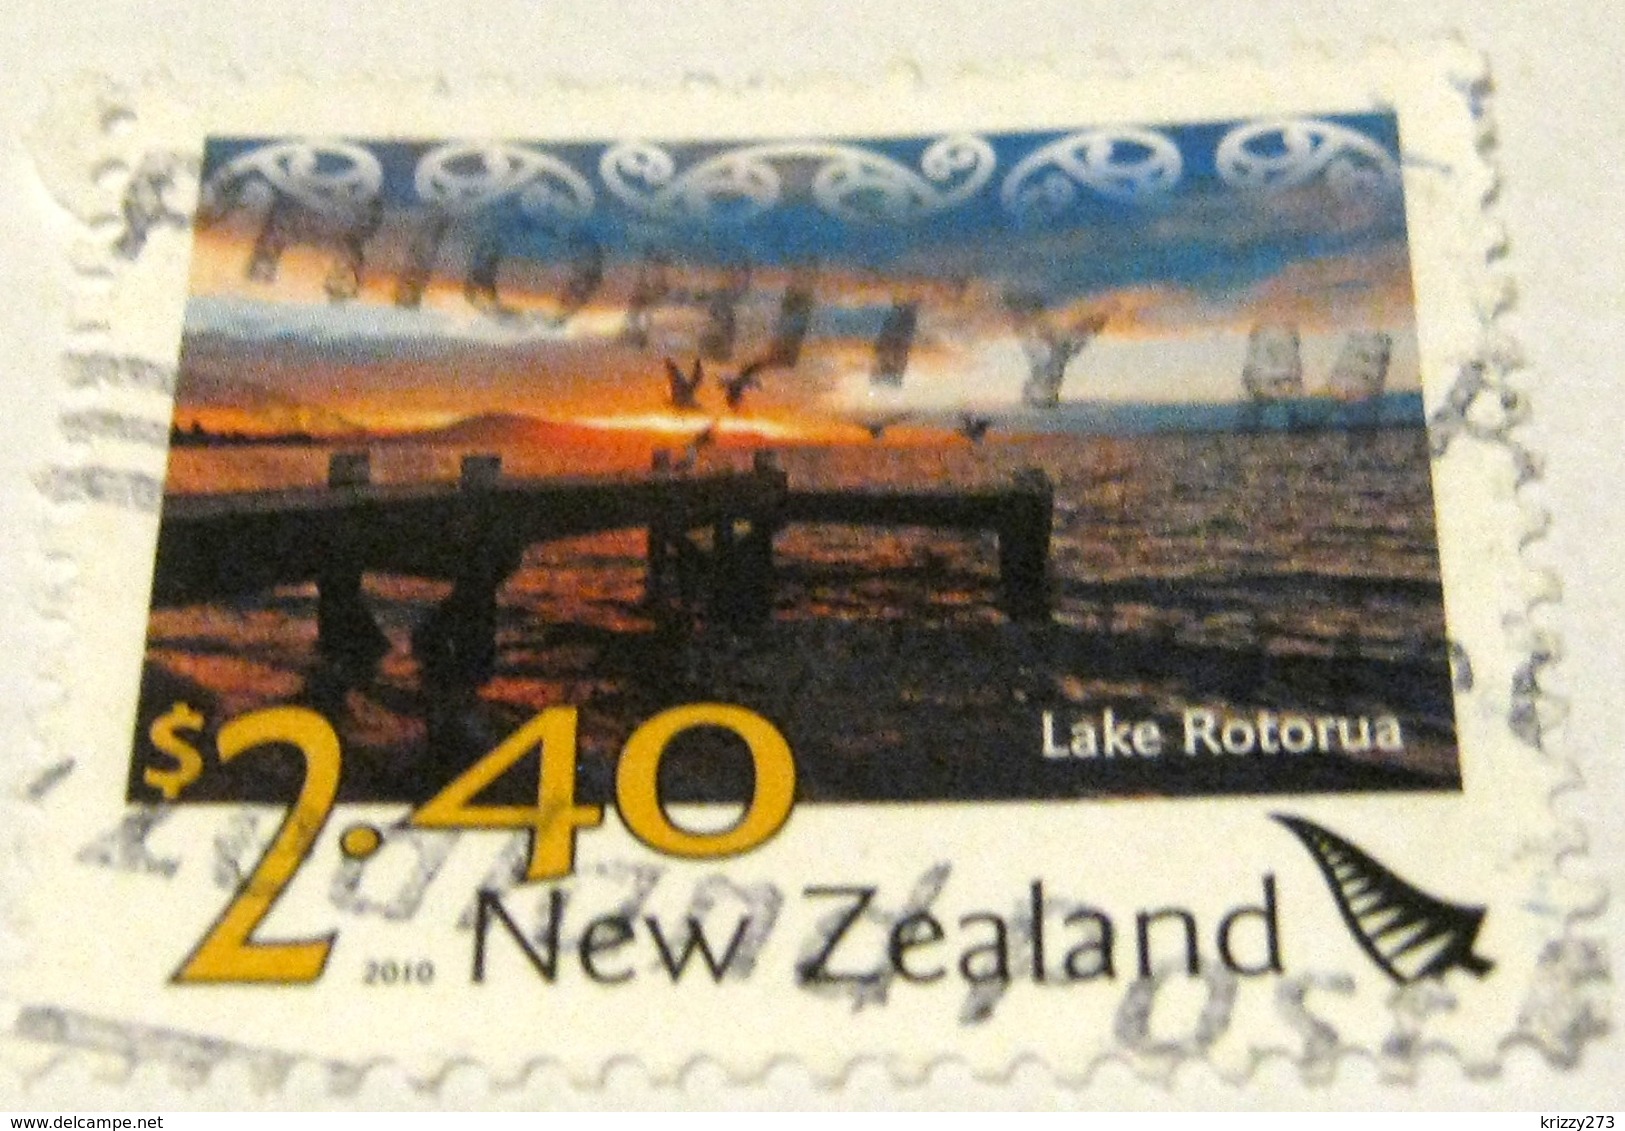 New Zealand 2010 Scenery Lake Rotorua $2.40 - Used - Gebraucht